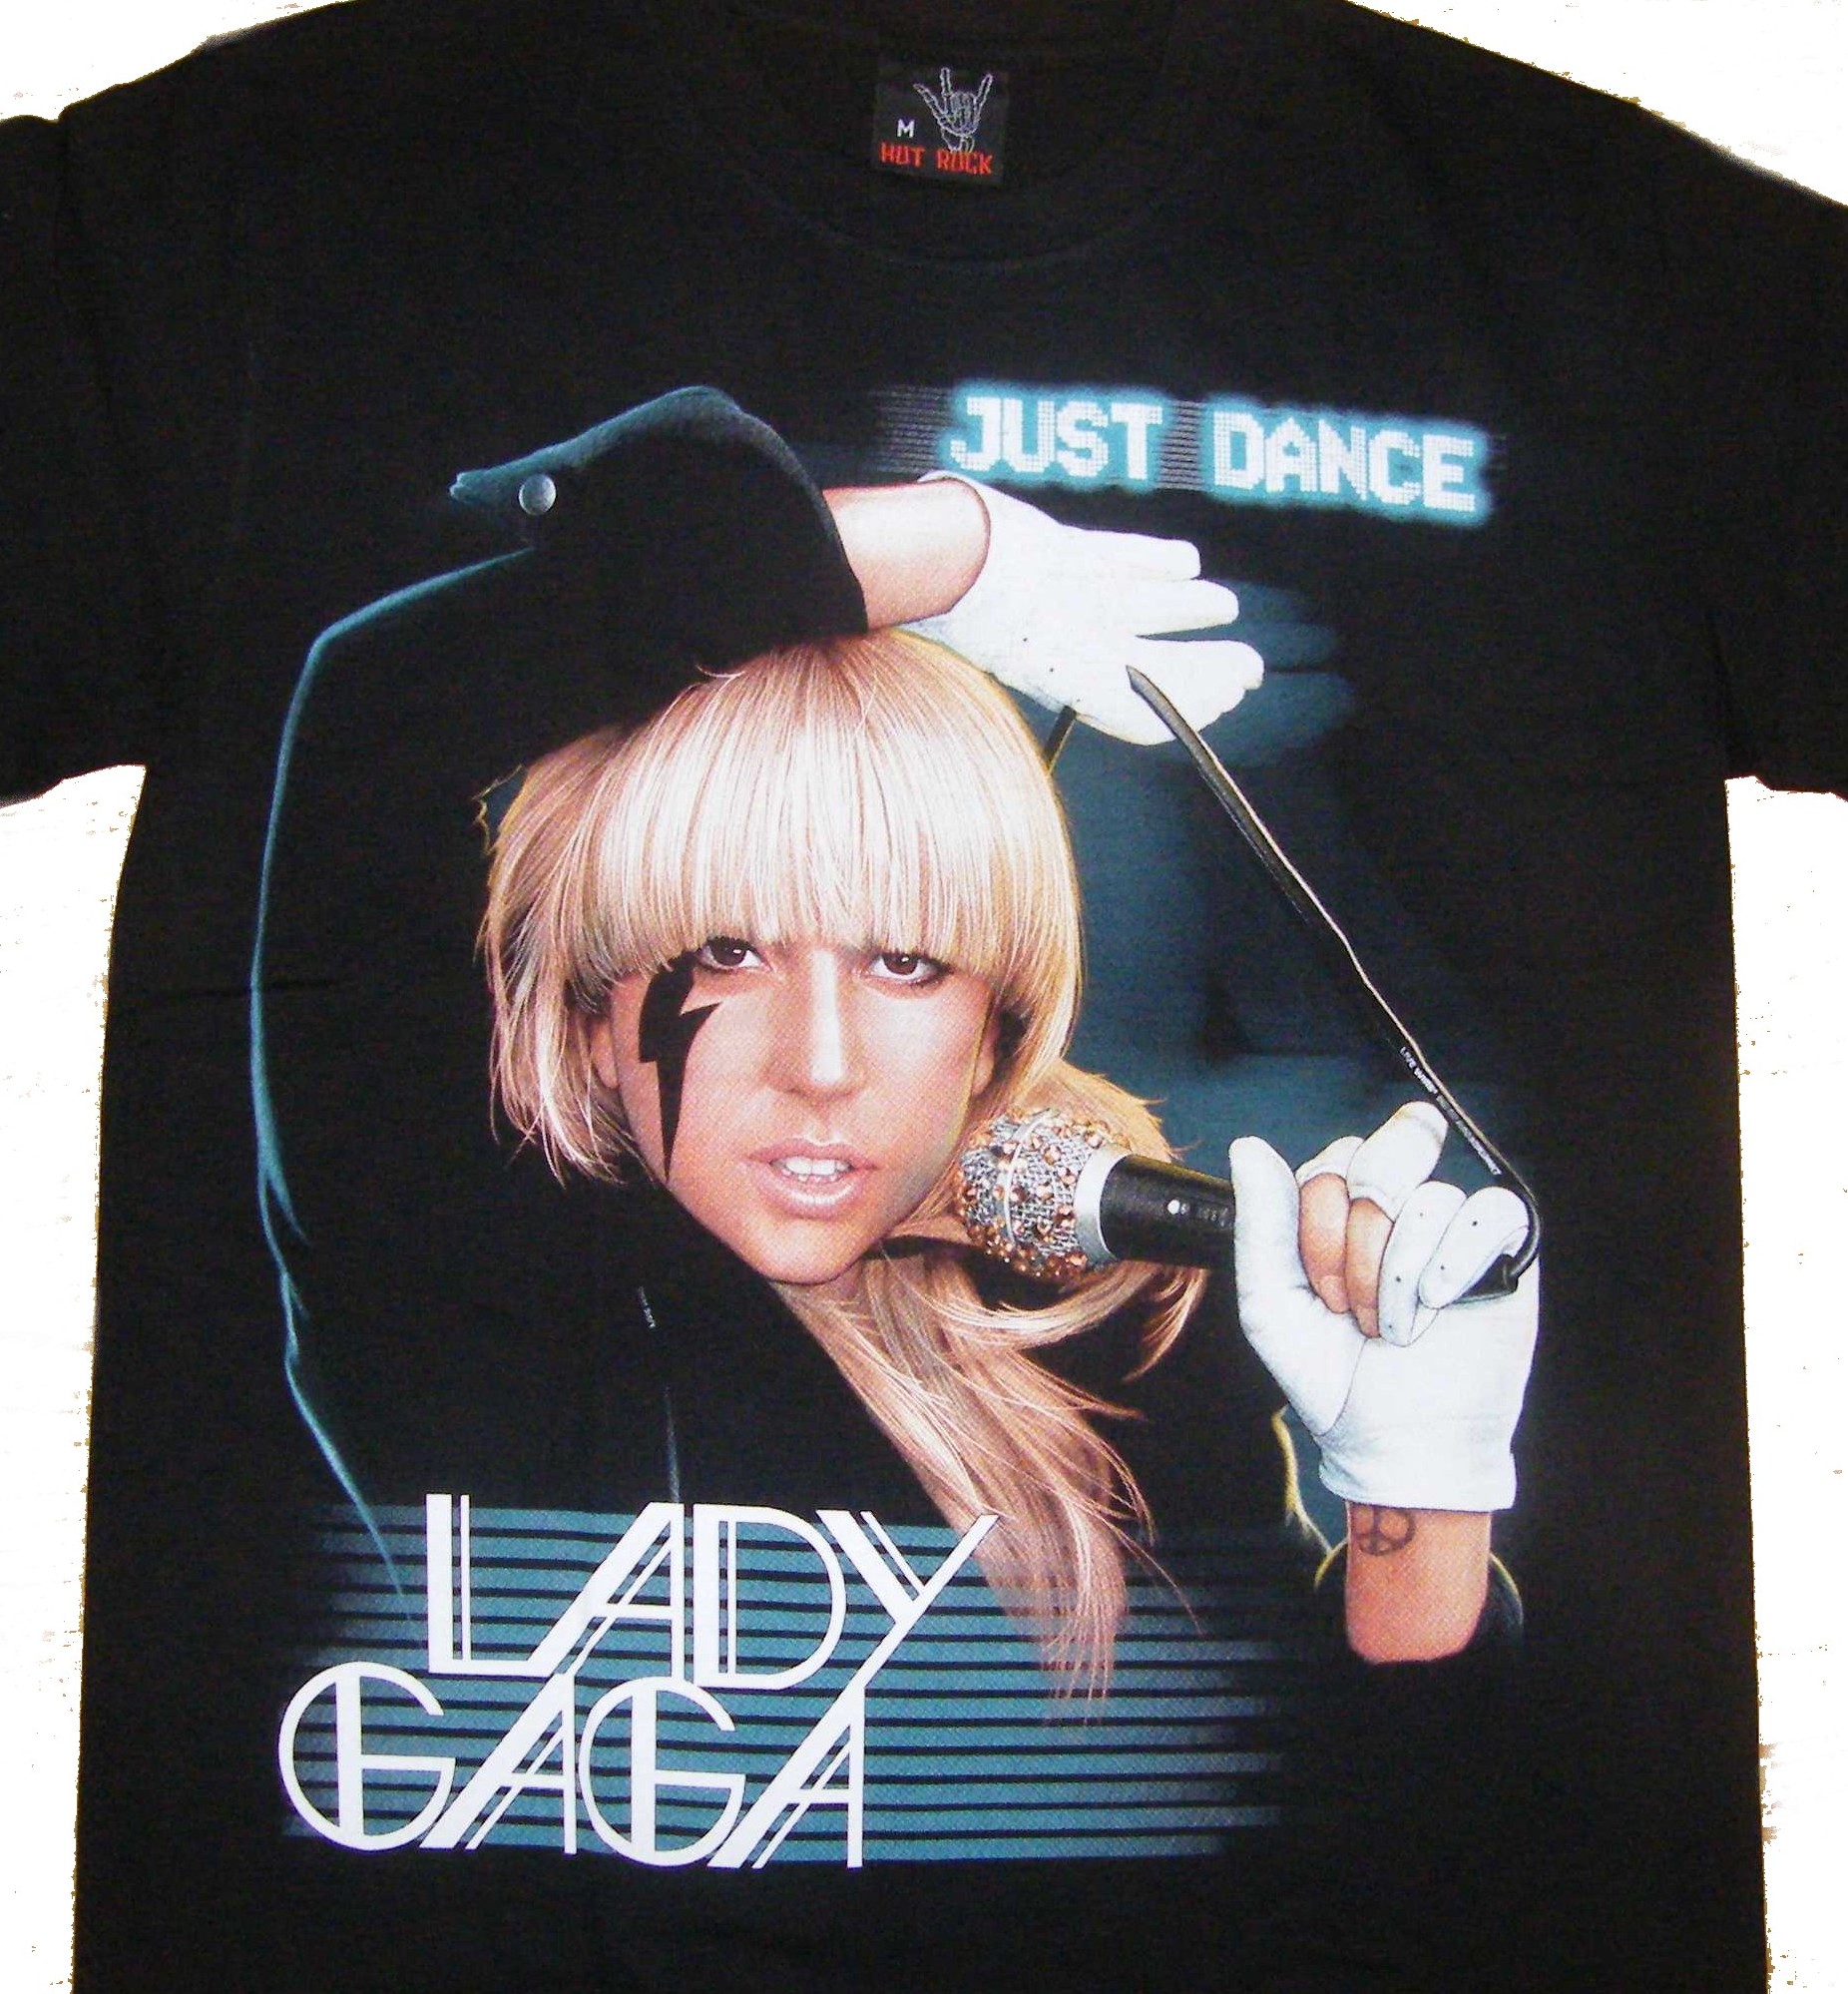 Hot Sale Lady Gaga tshirt distressed conditie flinterdun celebrity tshirt Kleding Meisjeskleding Tops & T-shirts T-shirts T-shirts met print 